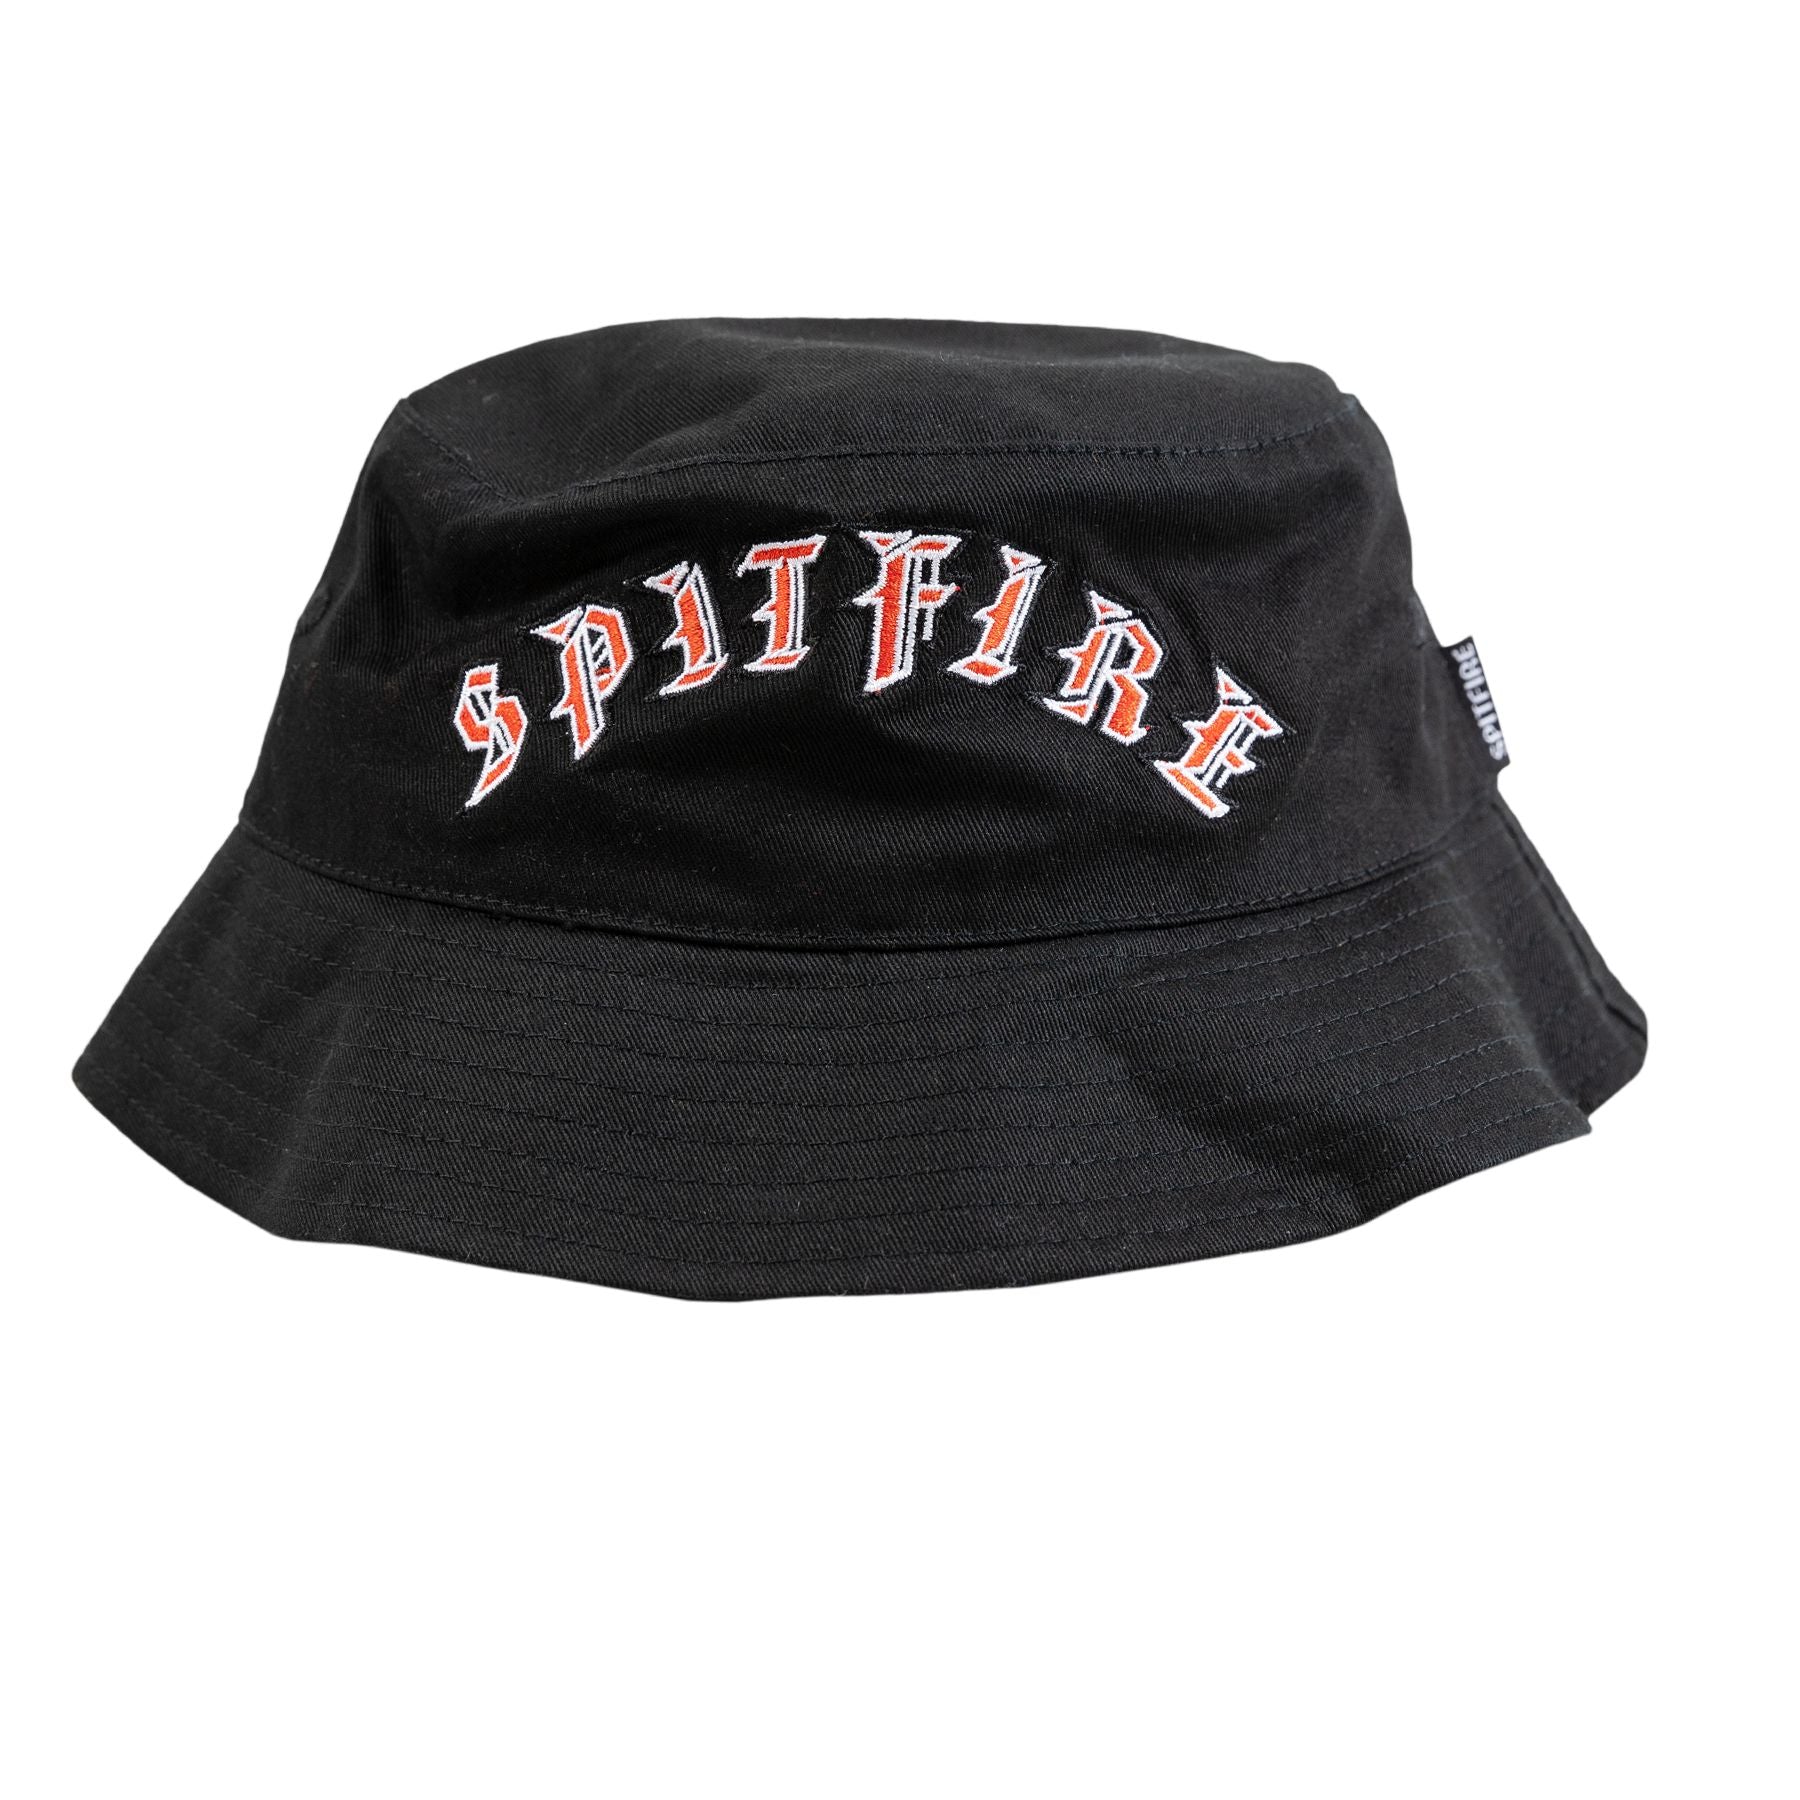 Spitfire Old English Arch Bucket Hat - Black